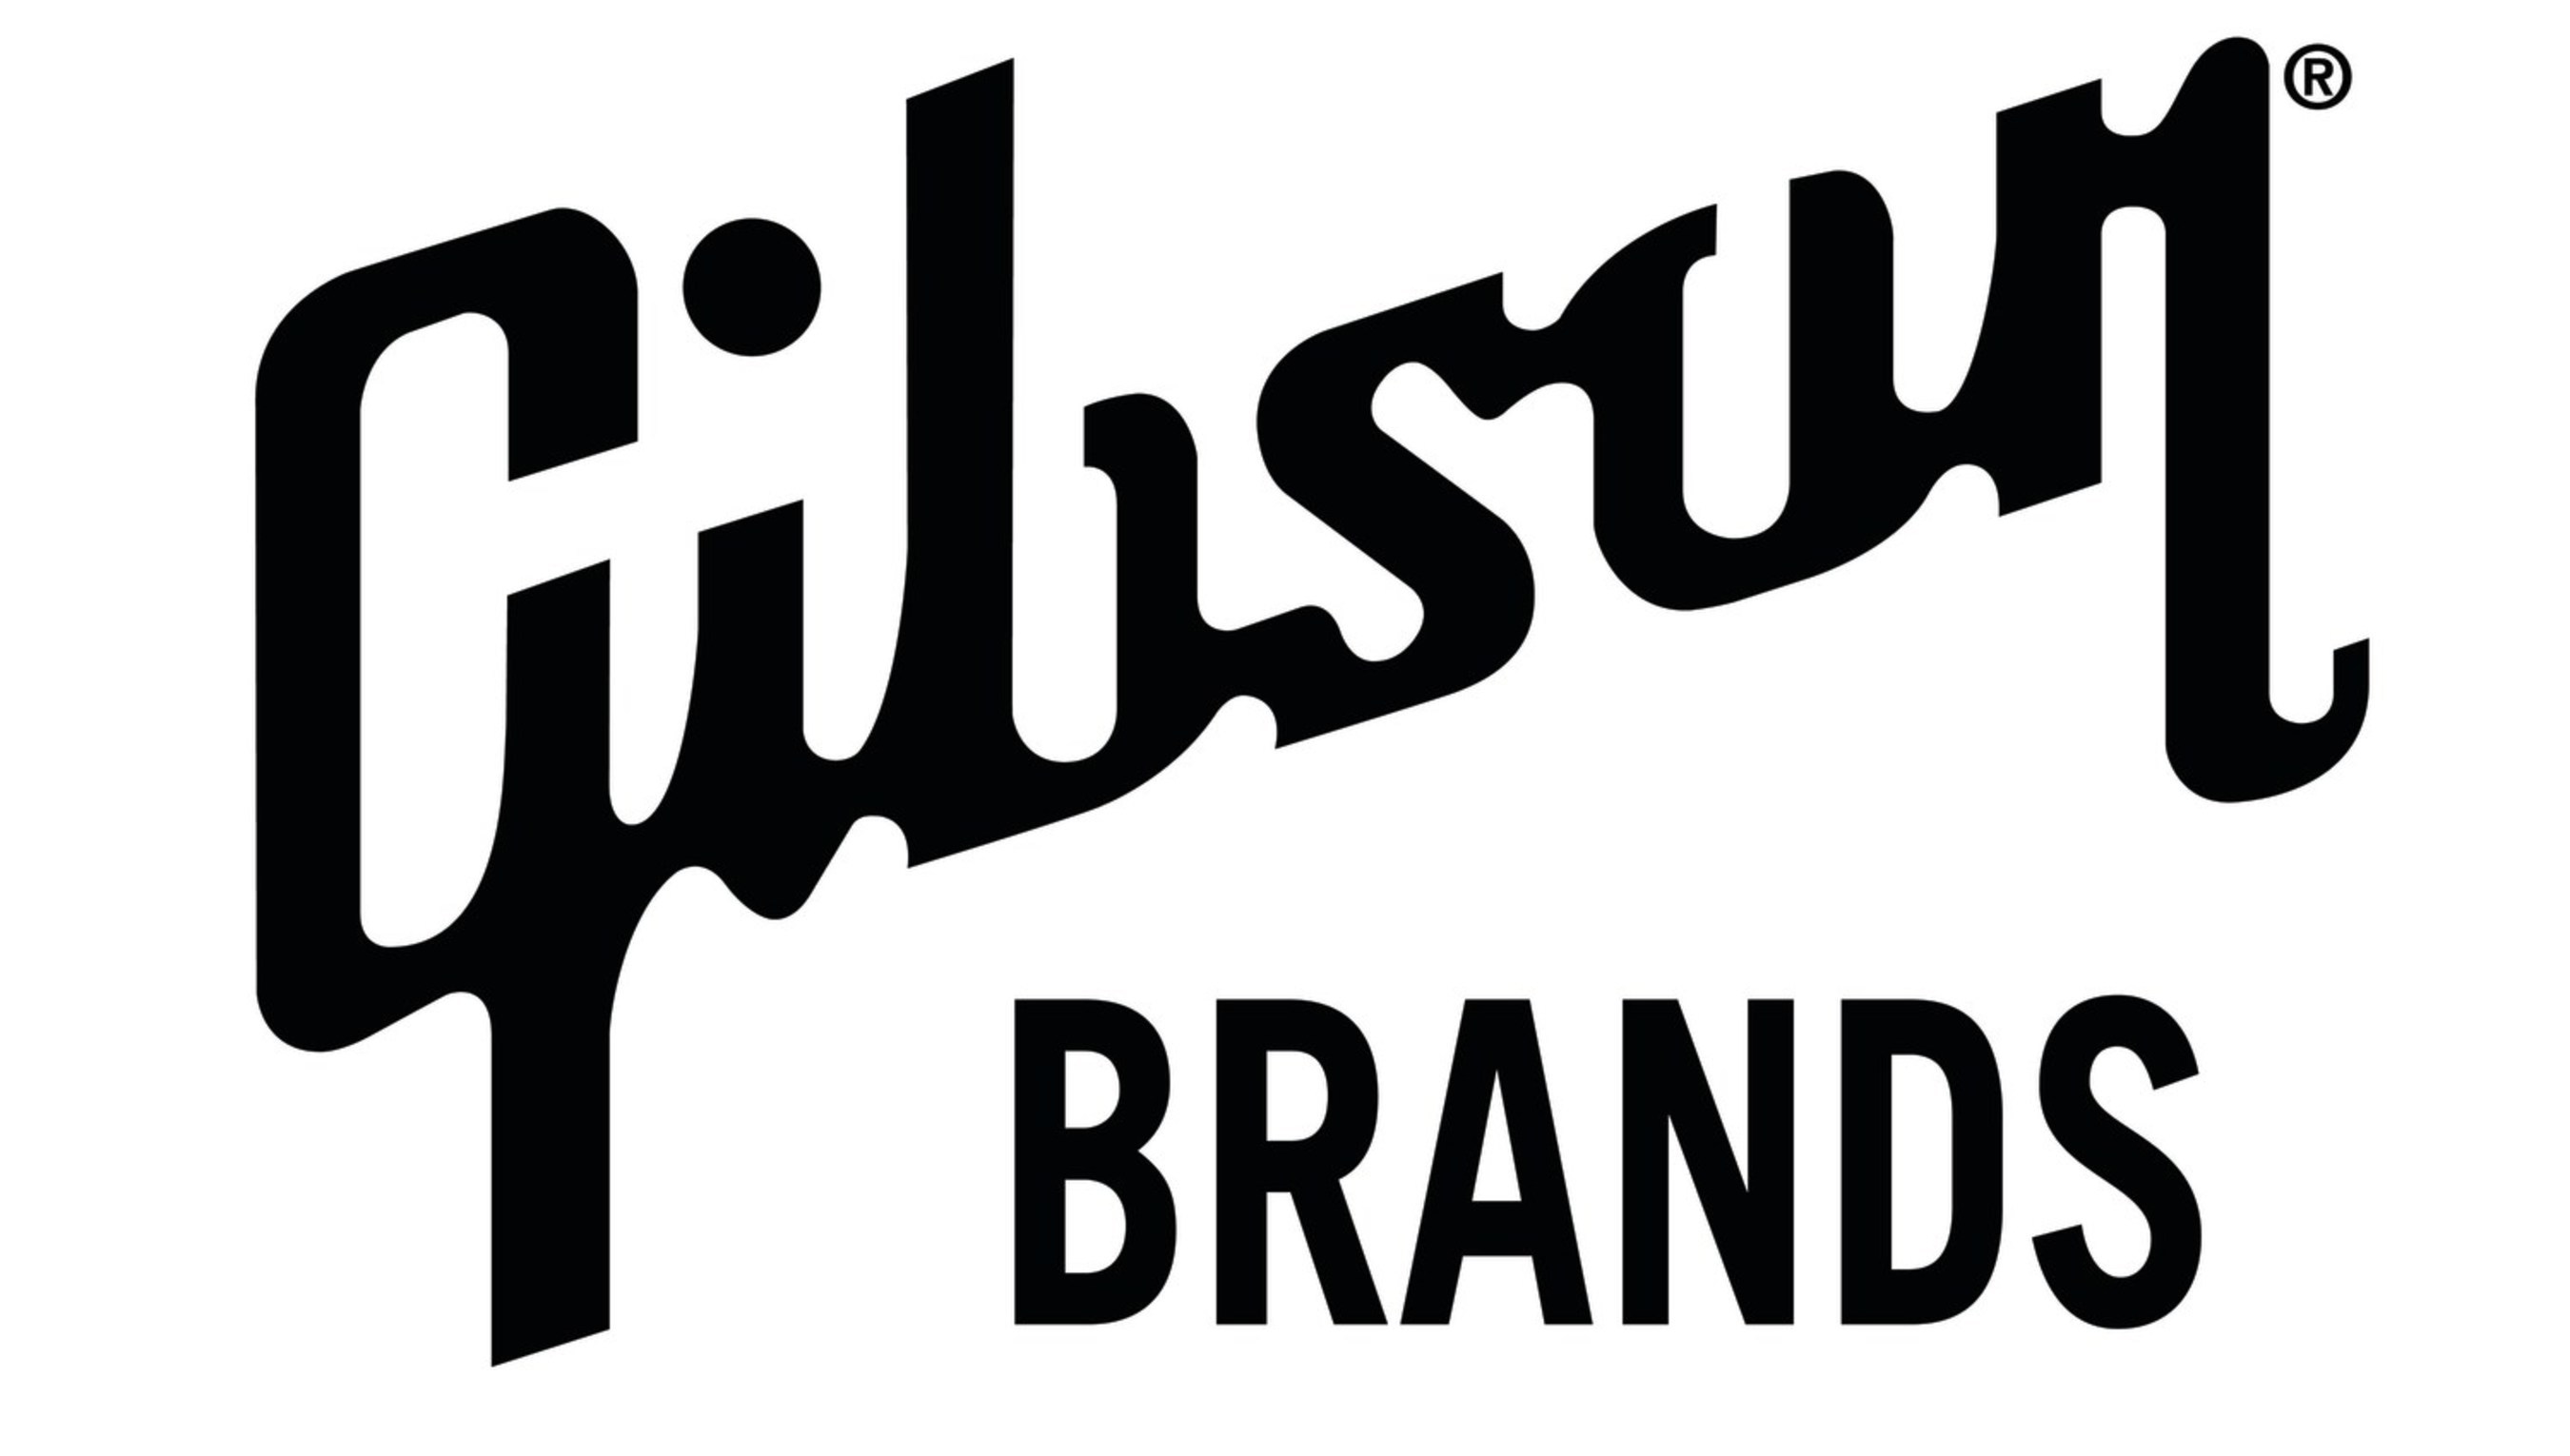 Gibson logo. (PRNewsfoto/Gibson)